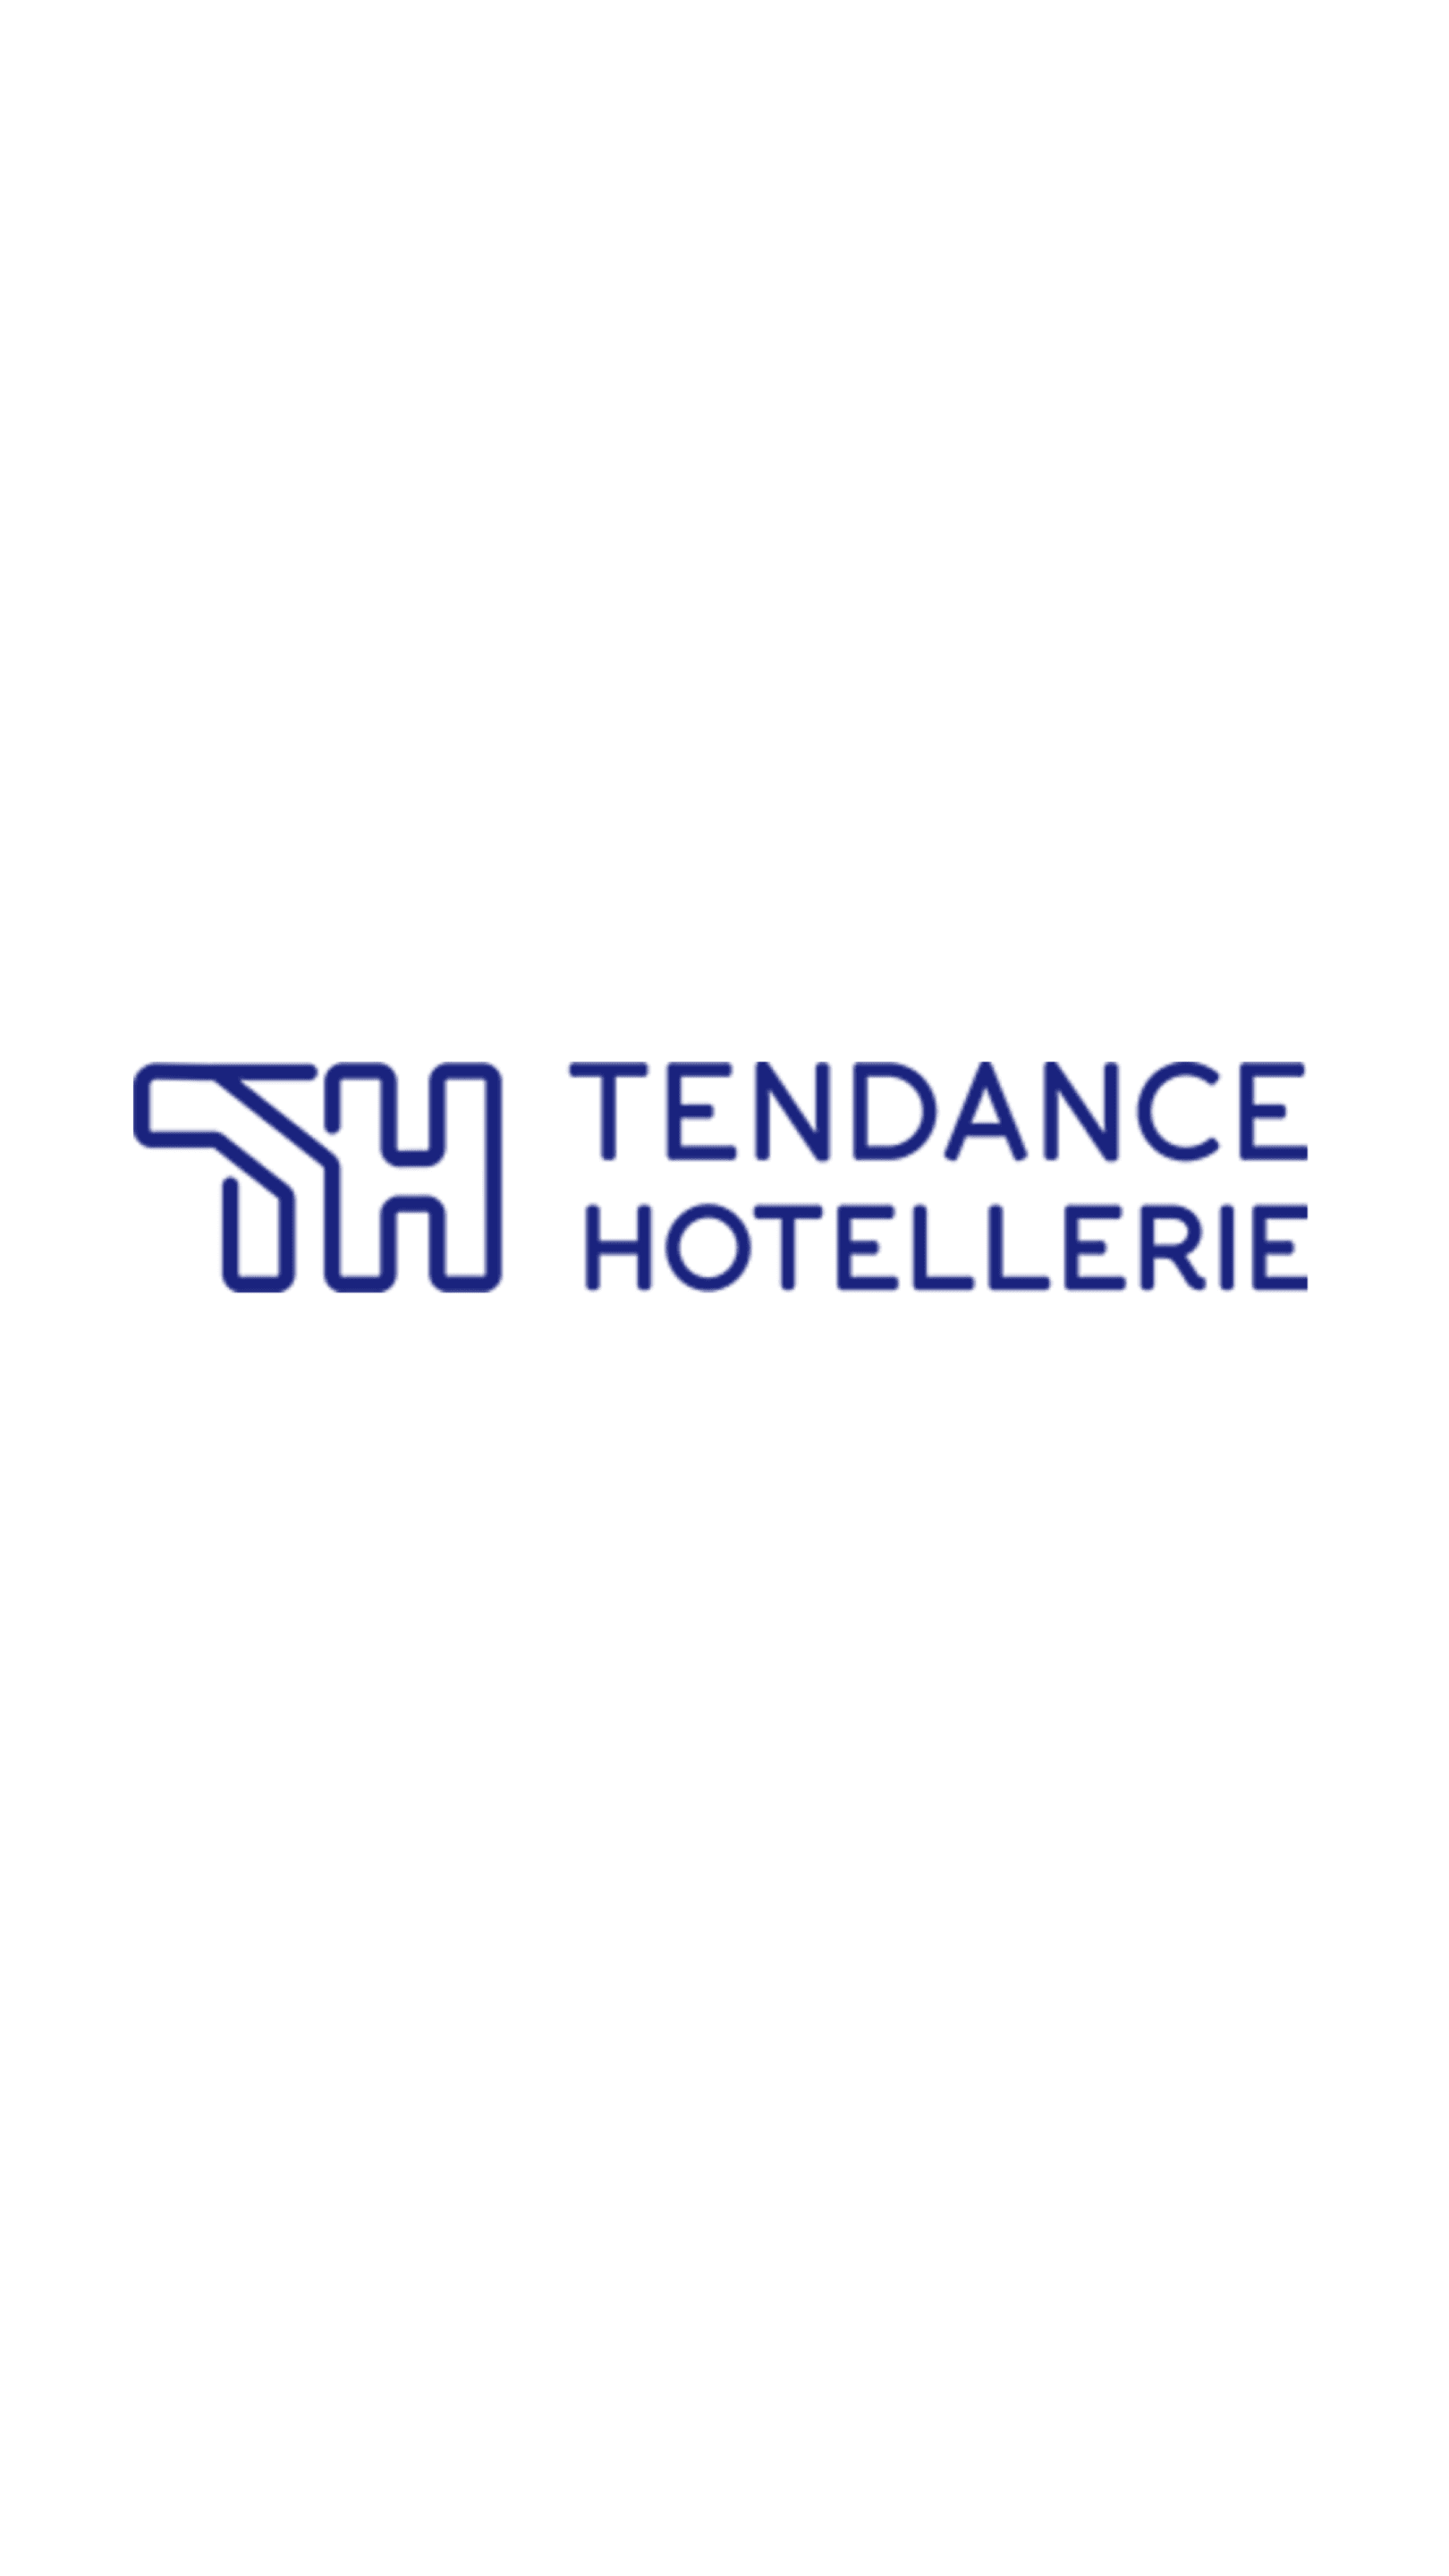 660/Presse/Tendance_Hotellerie.png